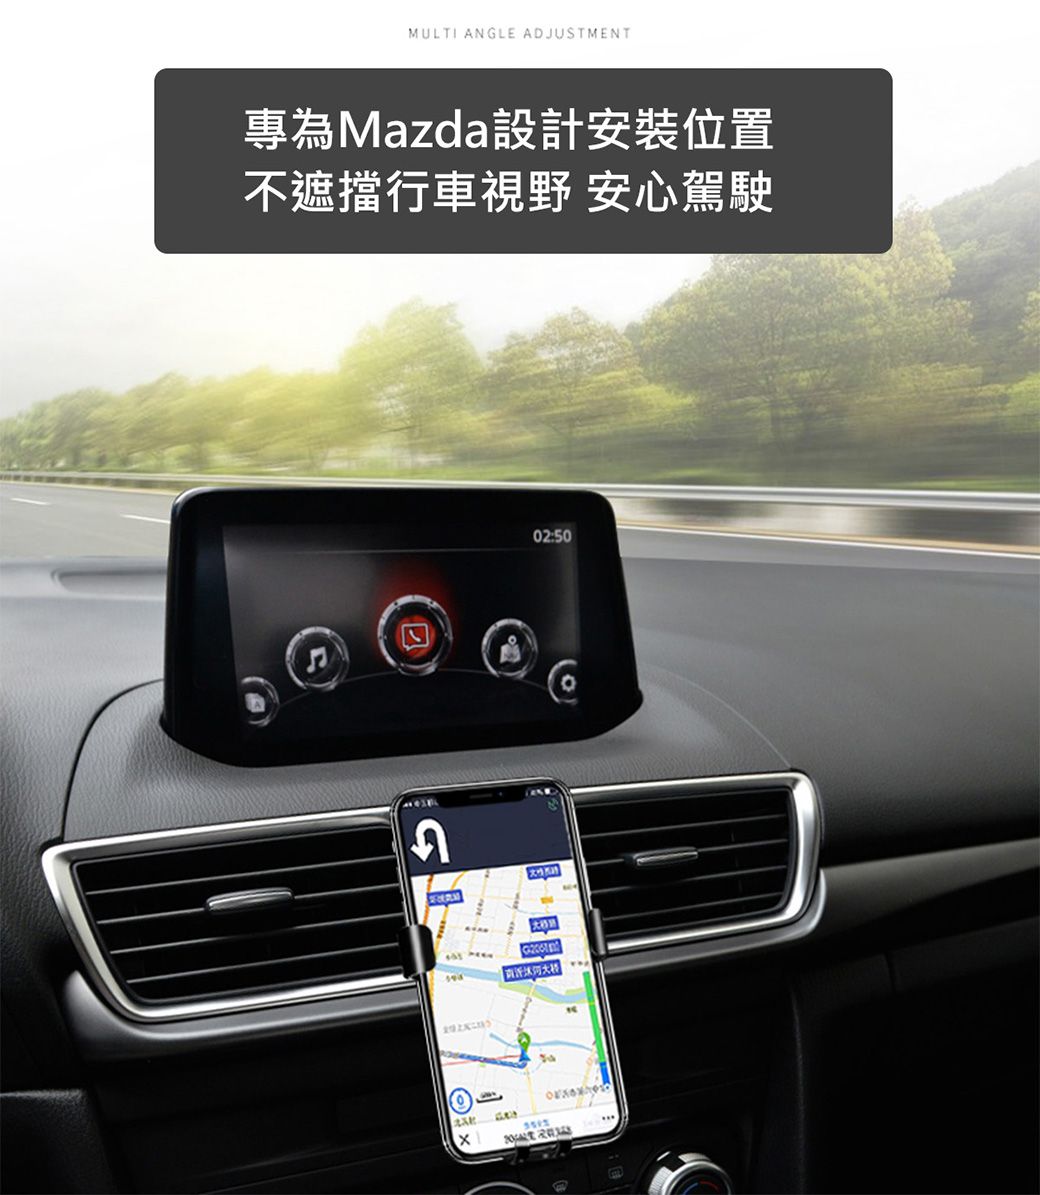 MULTI ANGLE ADJUSTMENT專為Mazda設計安裝位置不遮擋行車視野 安心駕駛 02:50